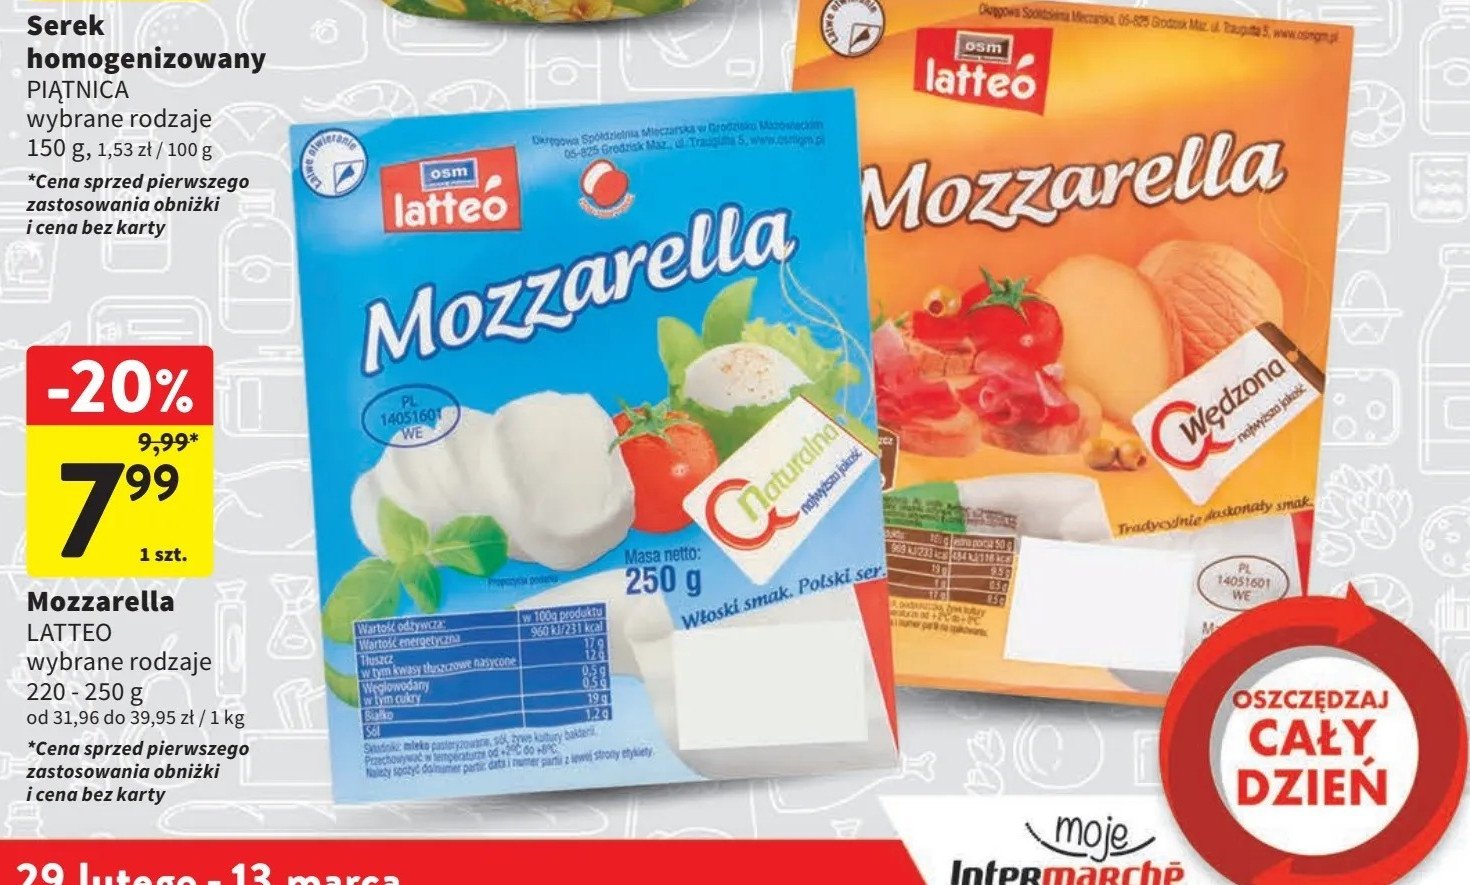 Mozzarella biała Latteo promocja